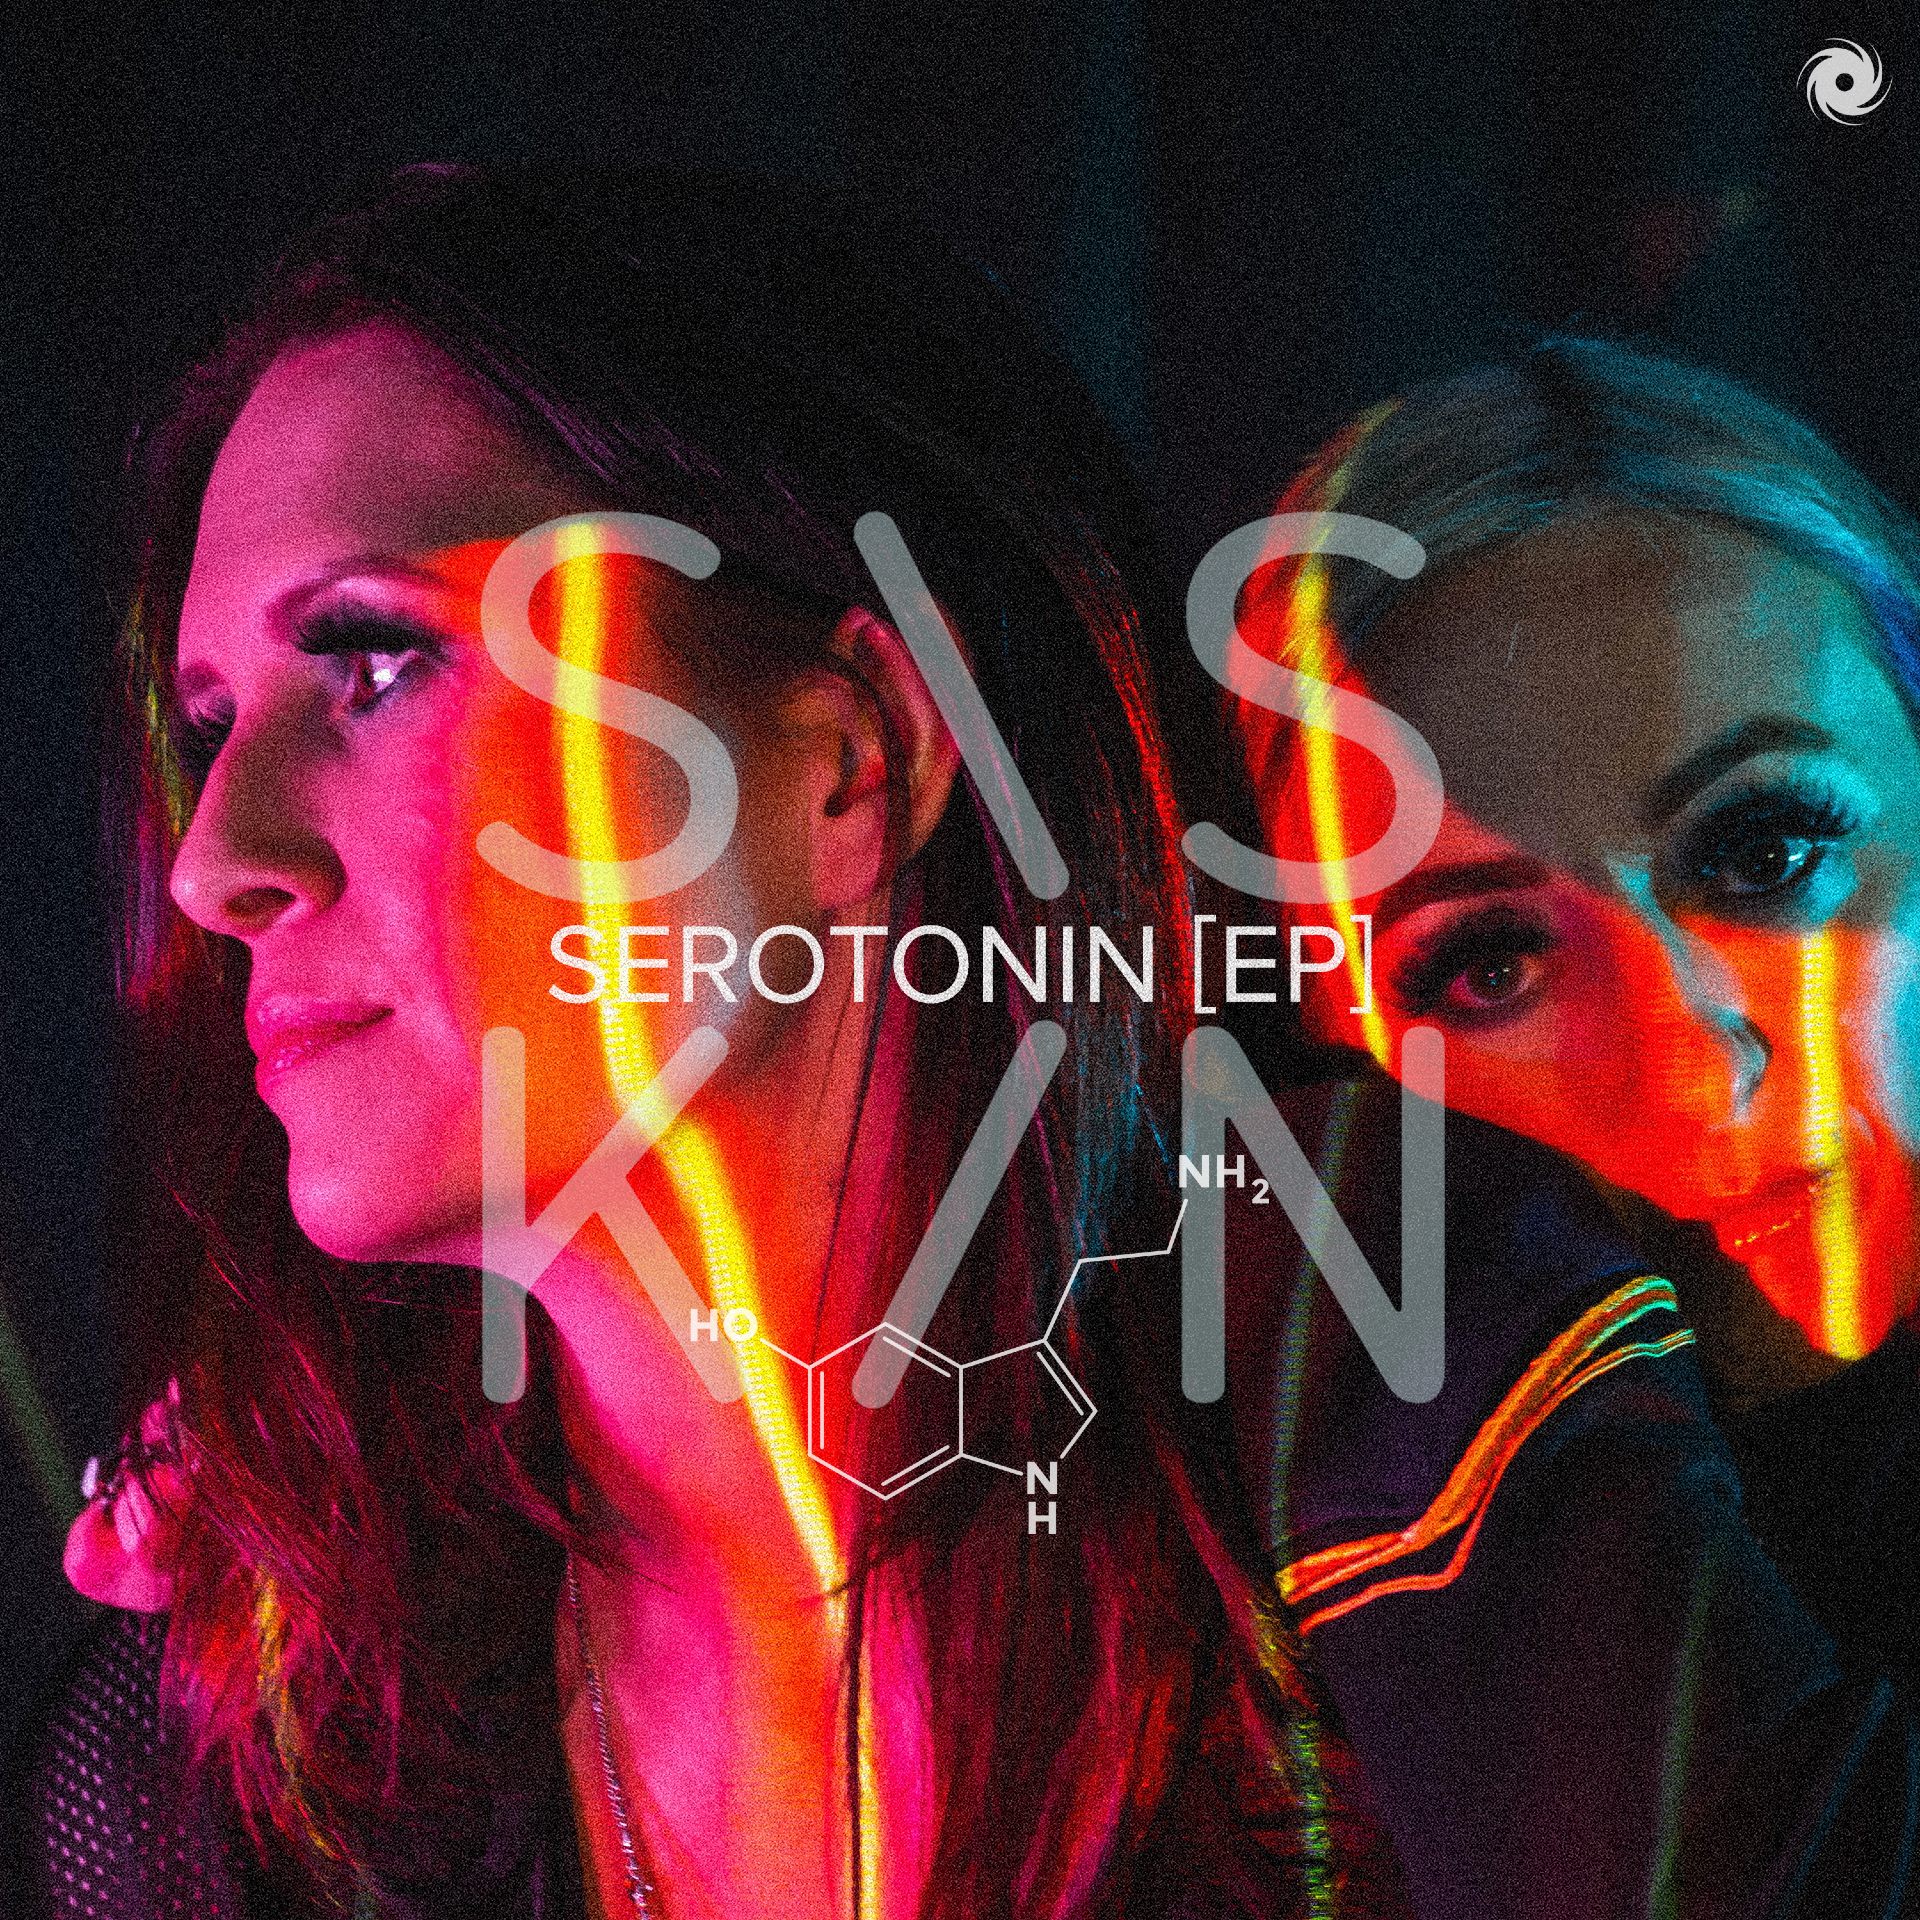 Siskin presents Serotonin EP on Black Hole Recordings